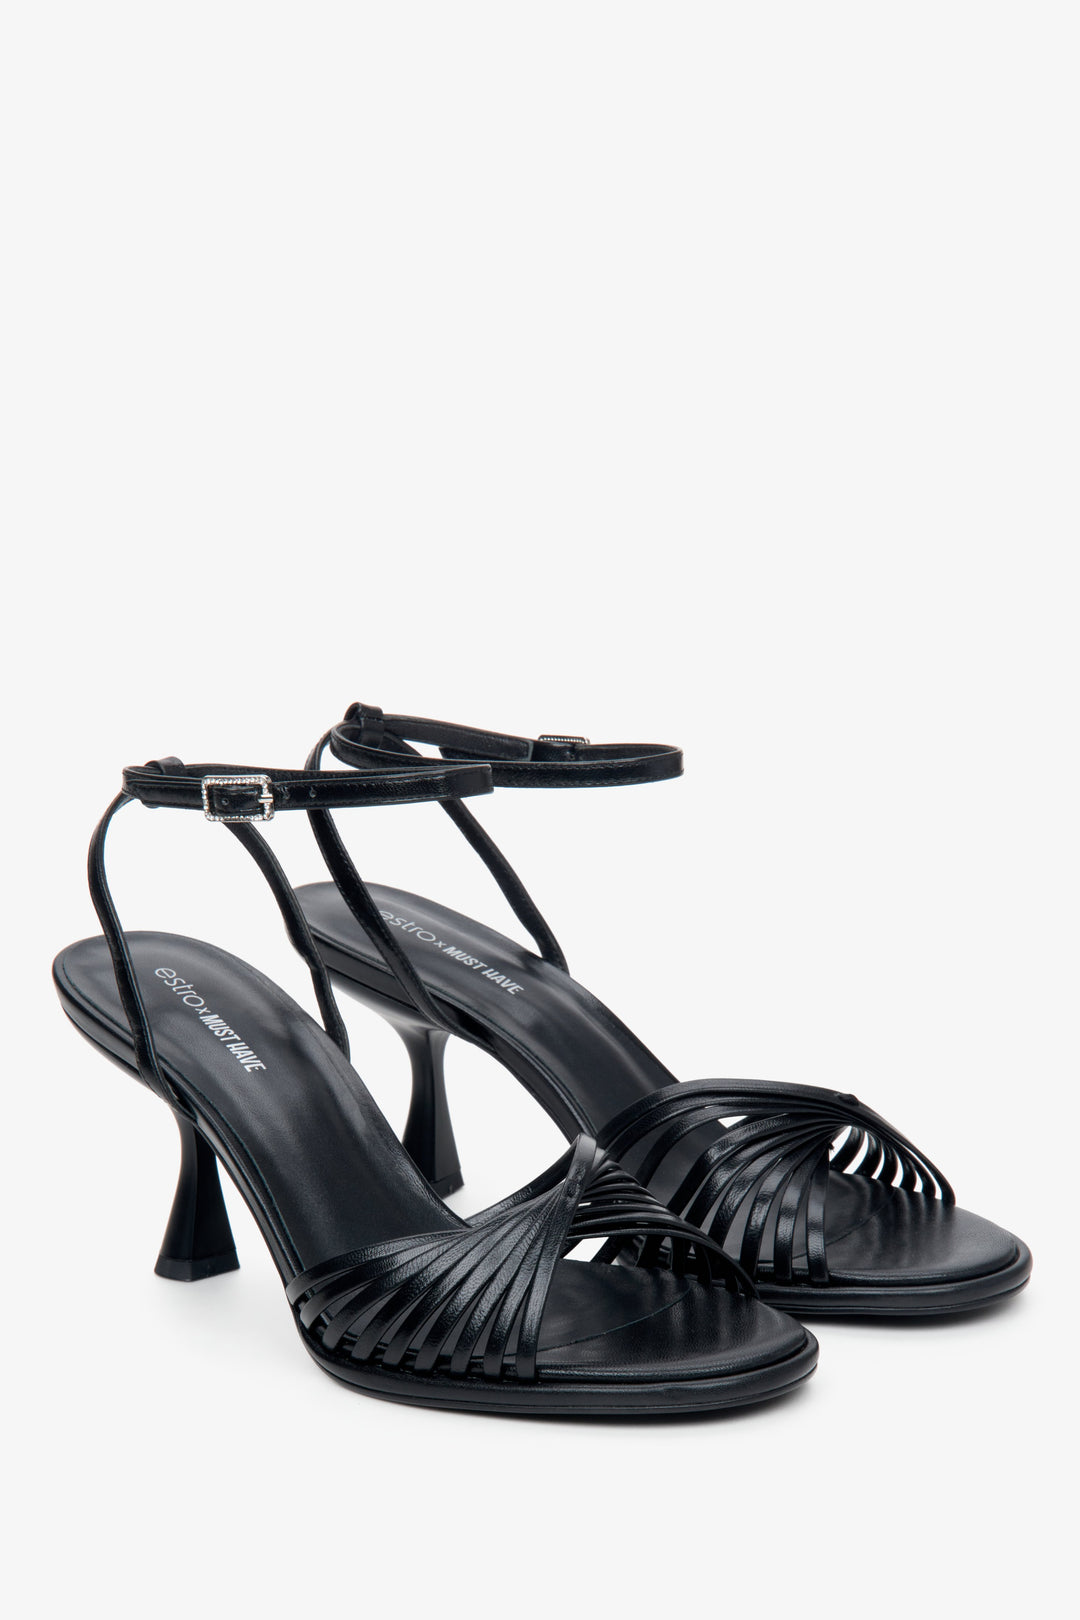 Estro x MustHave black women's sandals with stiletto heels.